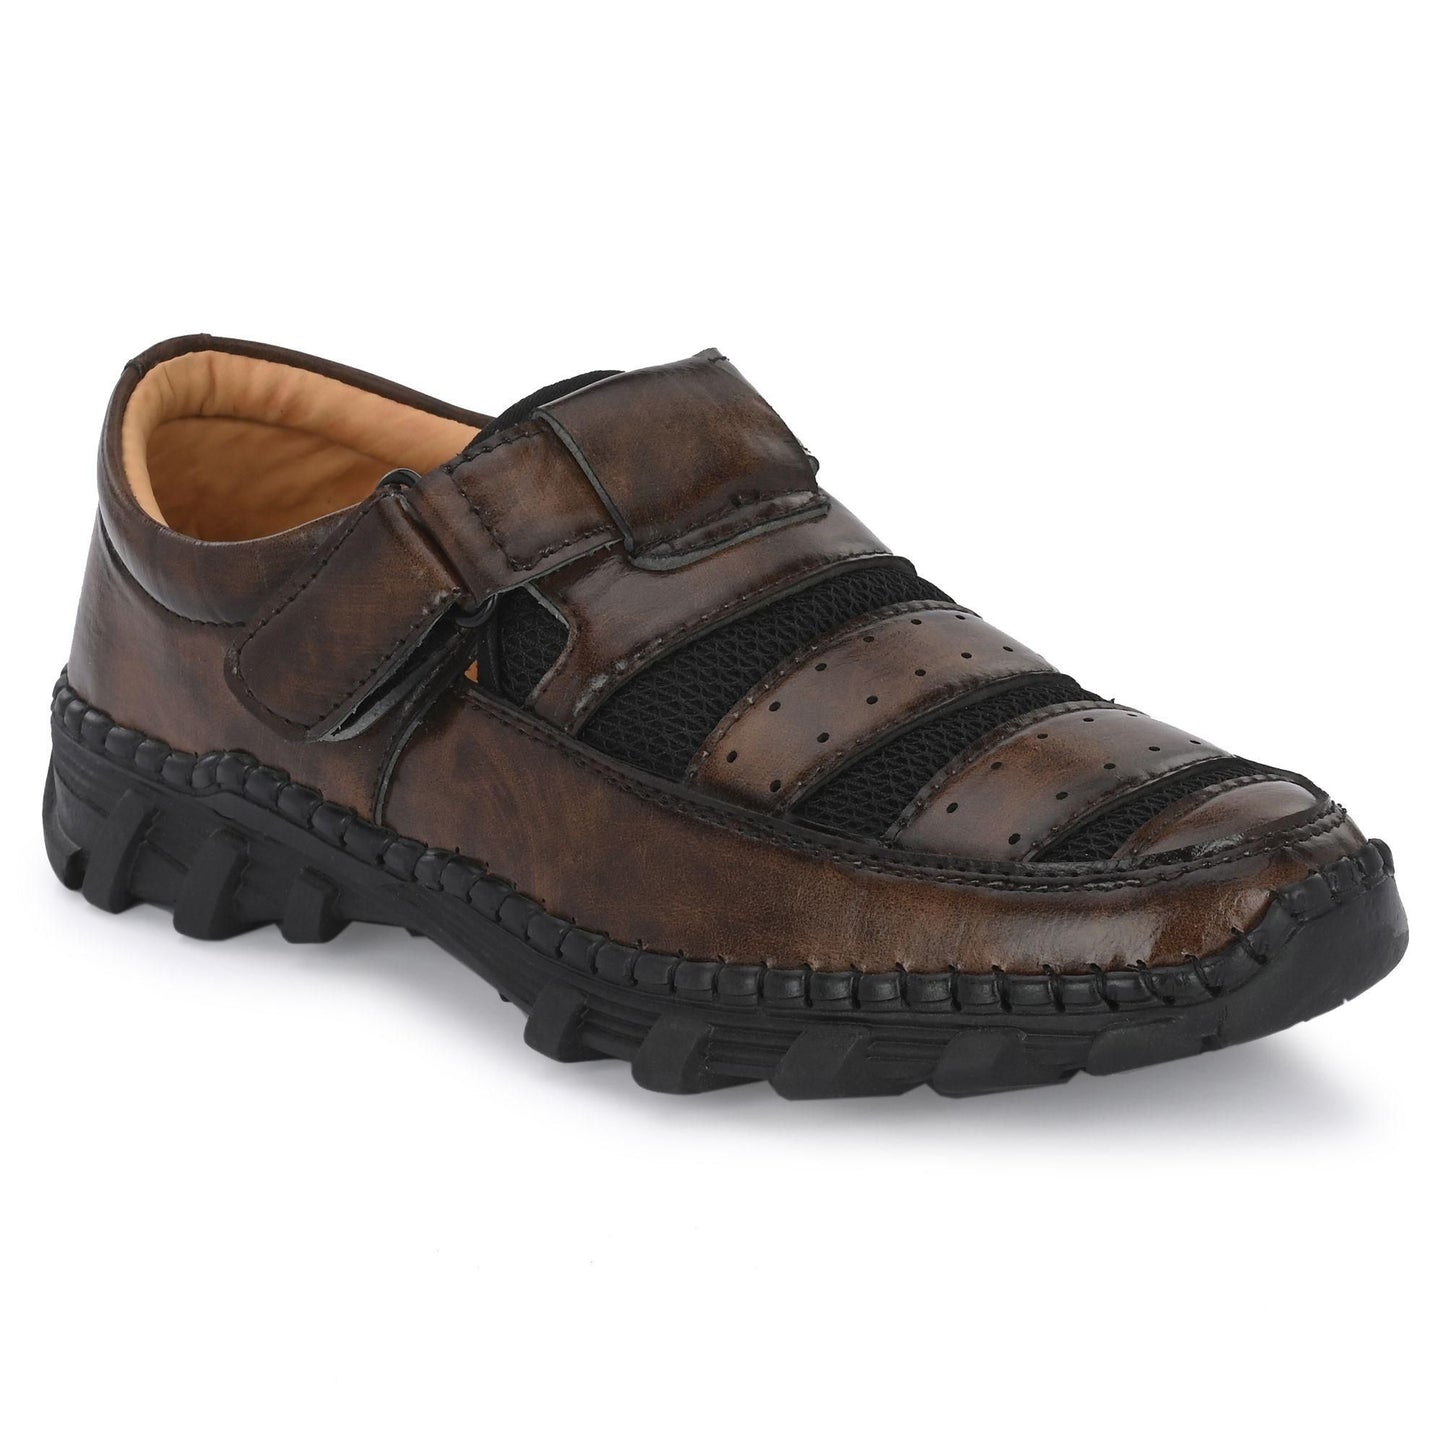 Men's Casual Roman Style Sandals Brown